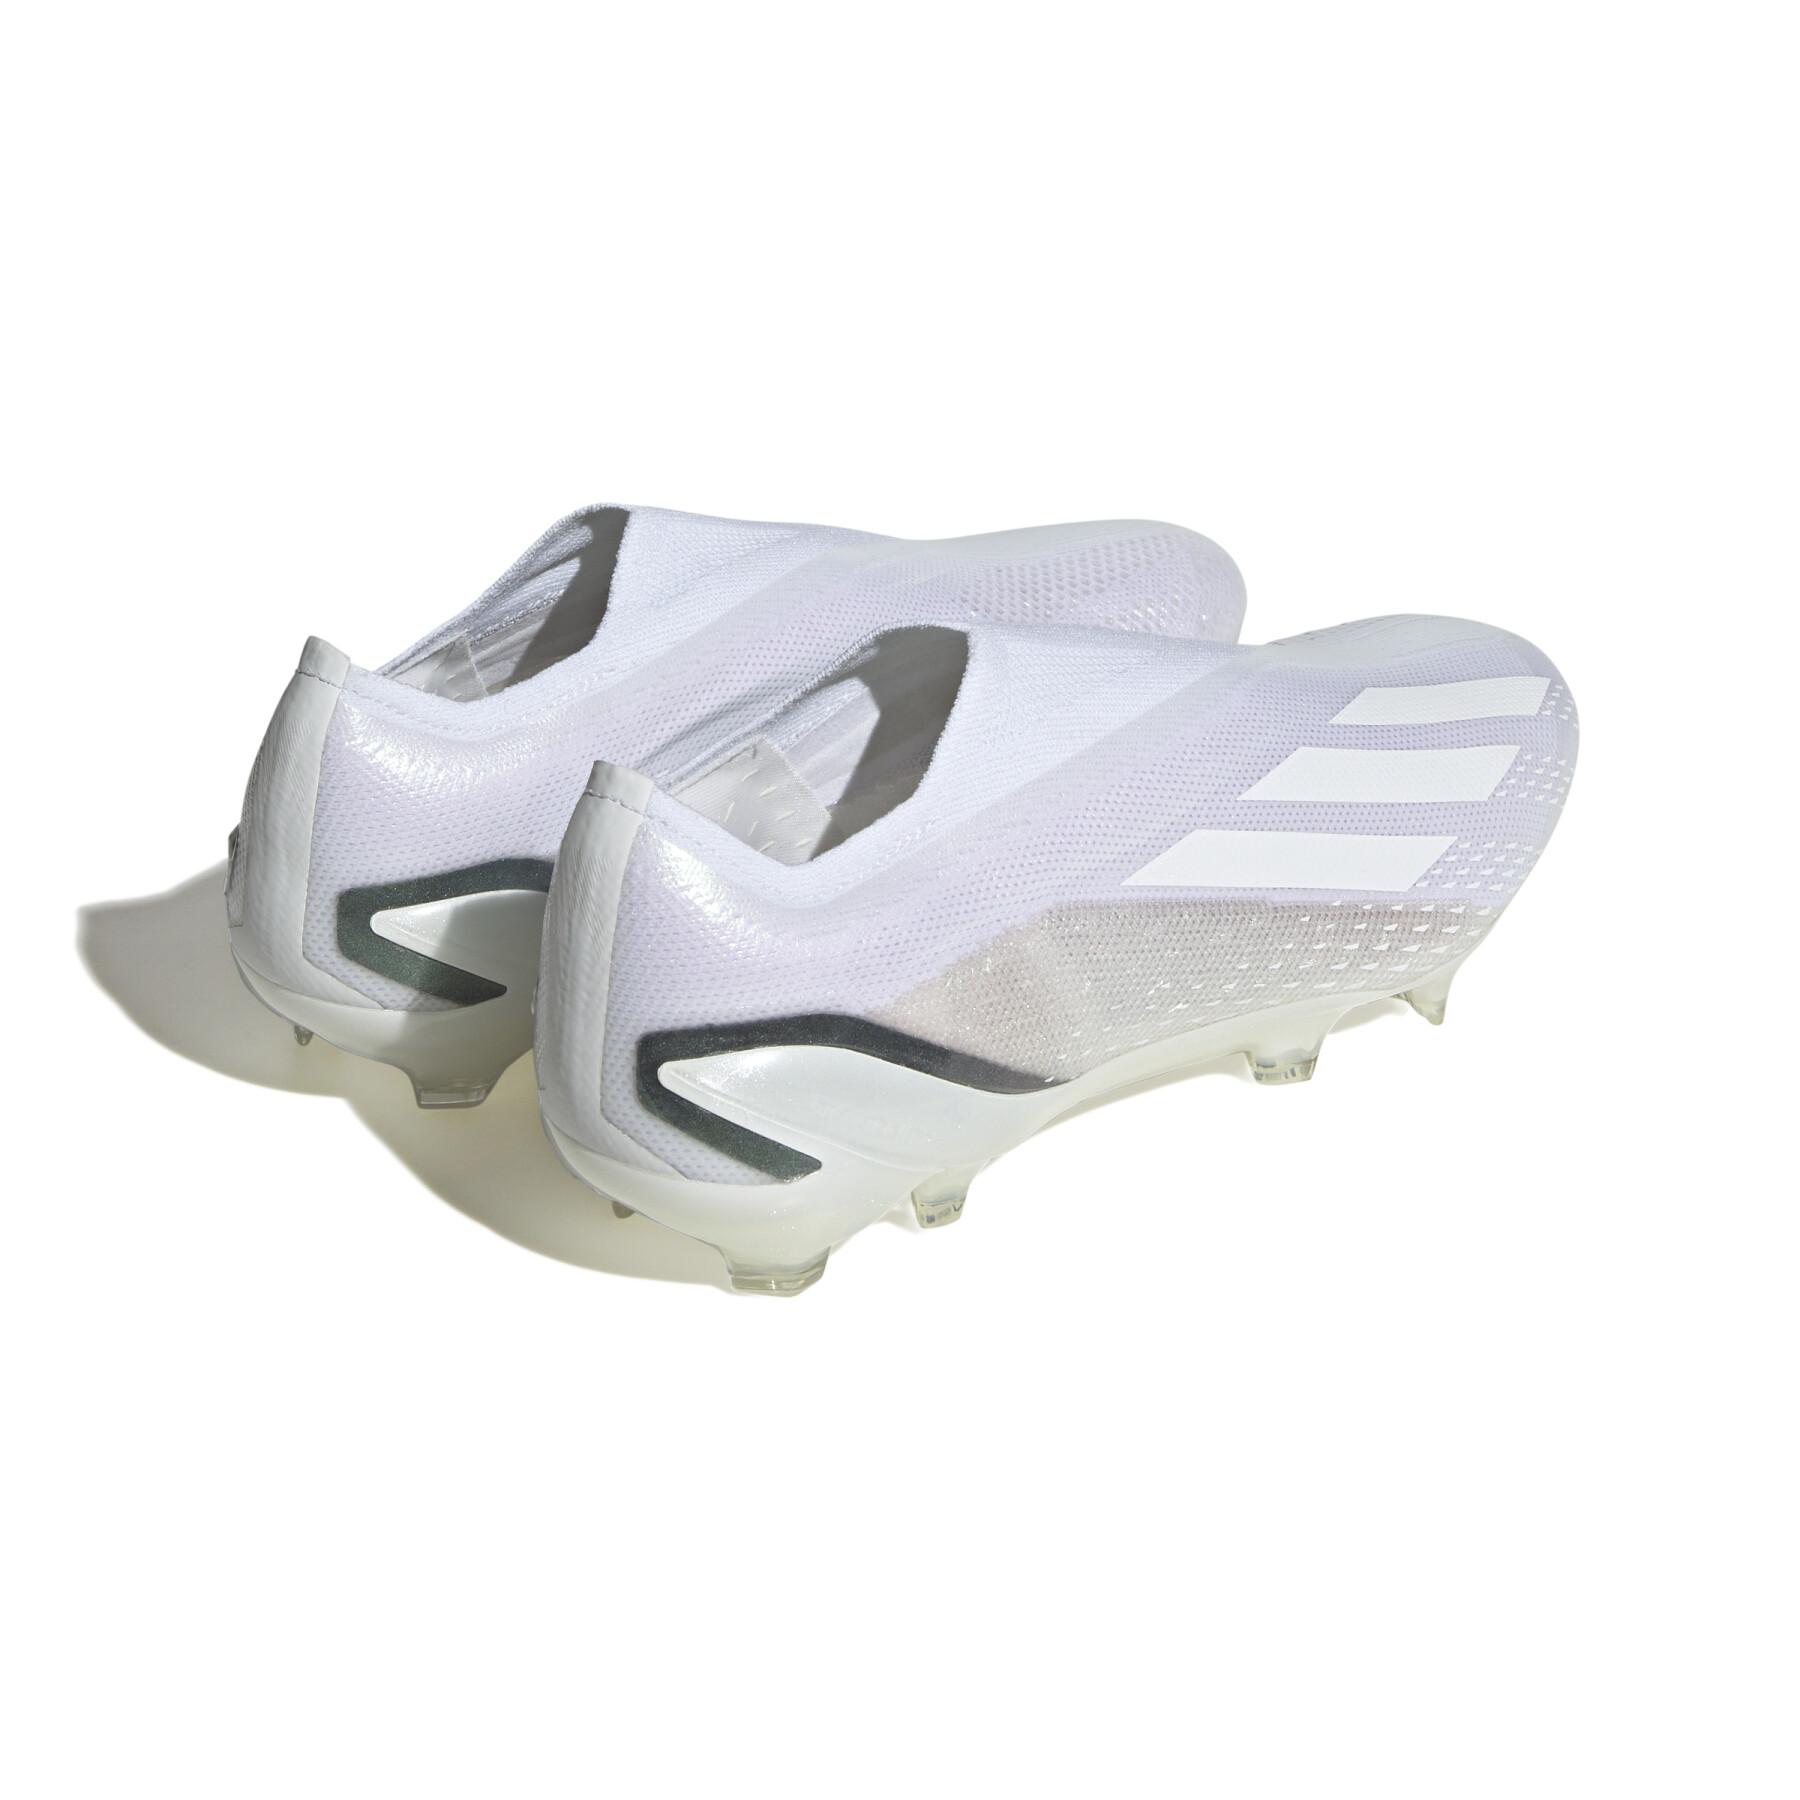 Chaussures de football adidas X Speedportal+ FG - Pearlized Pack